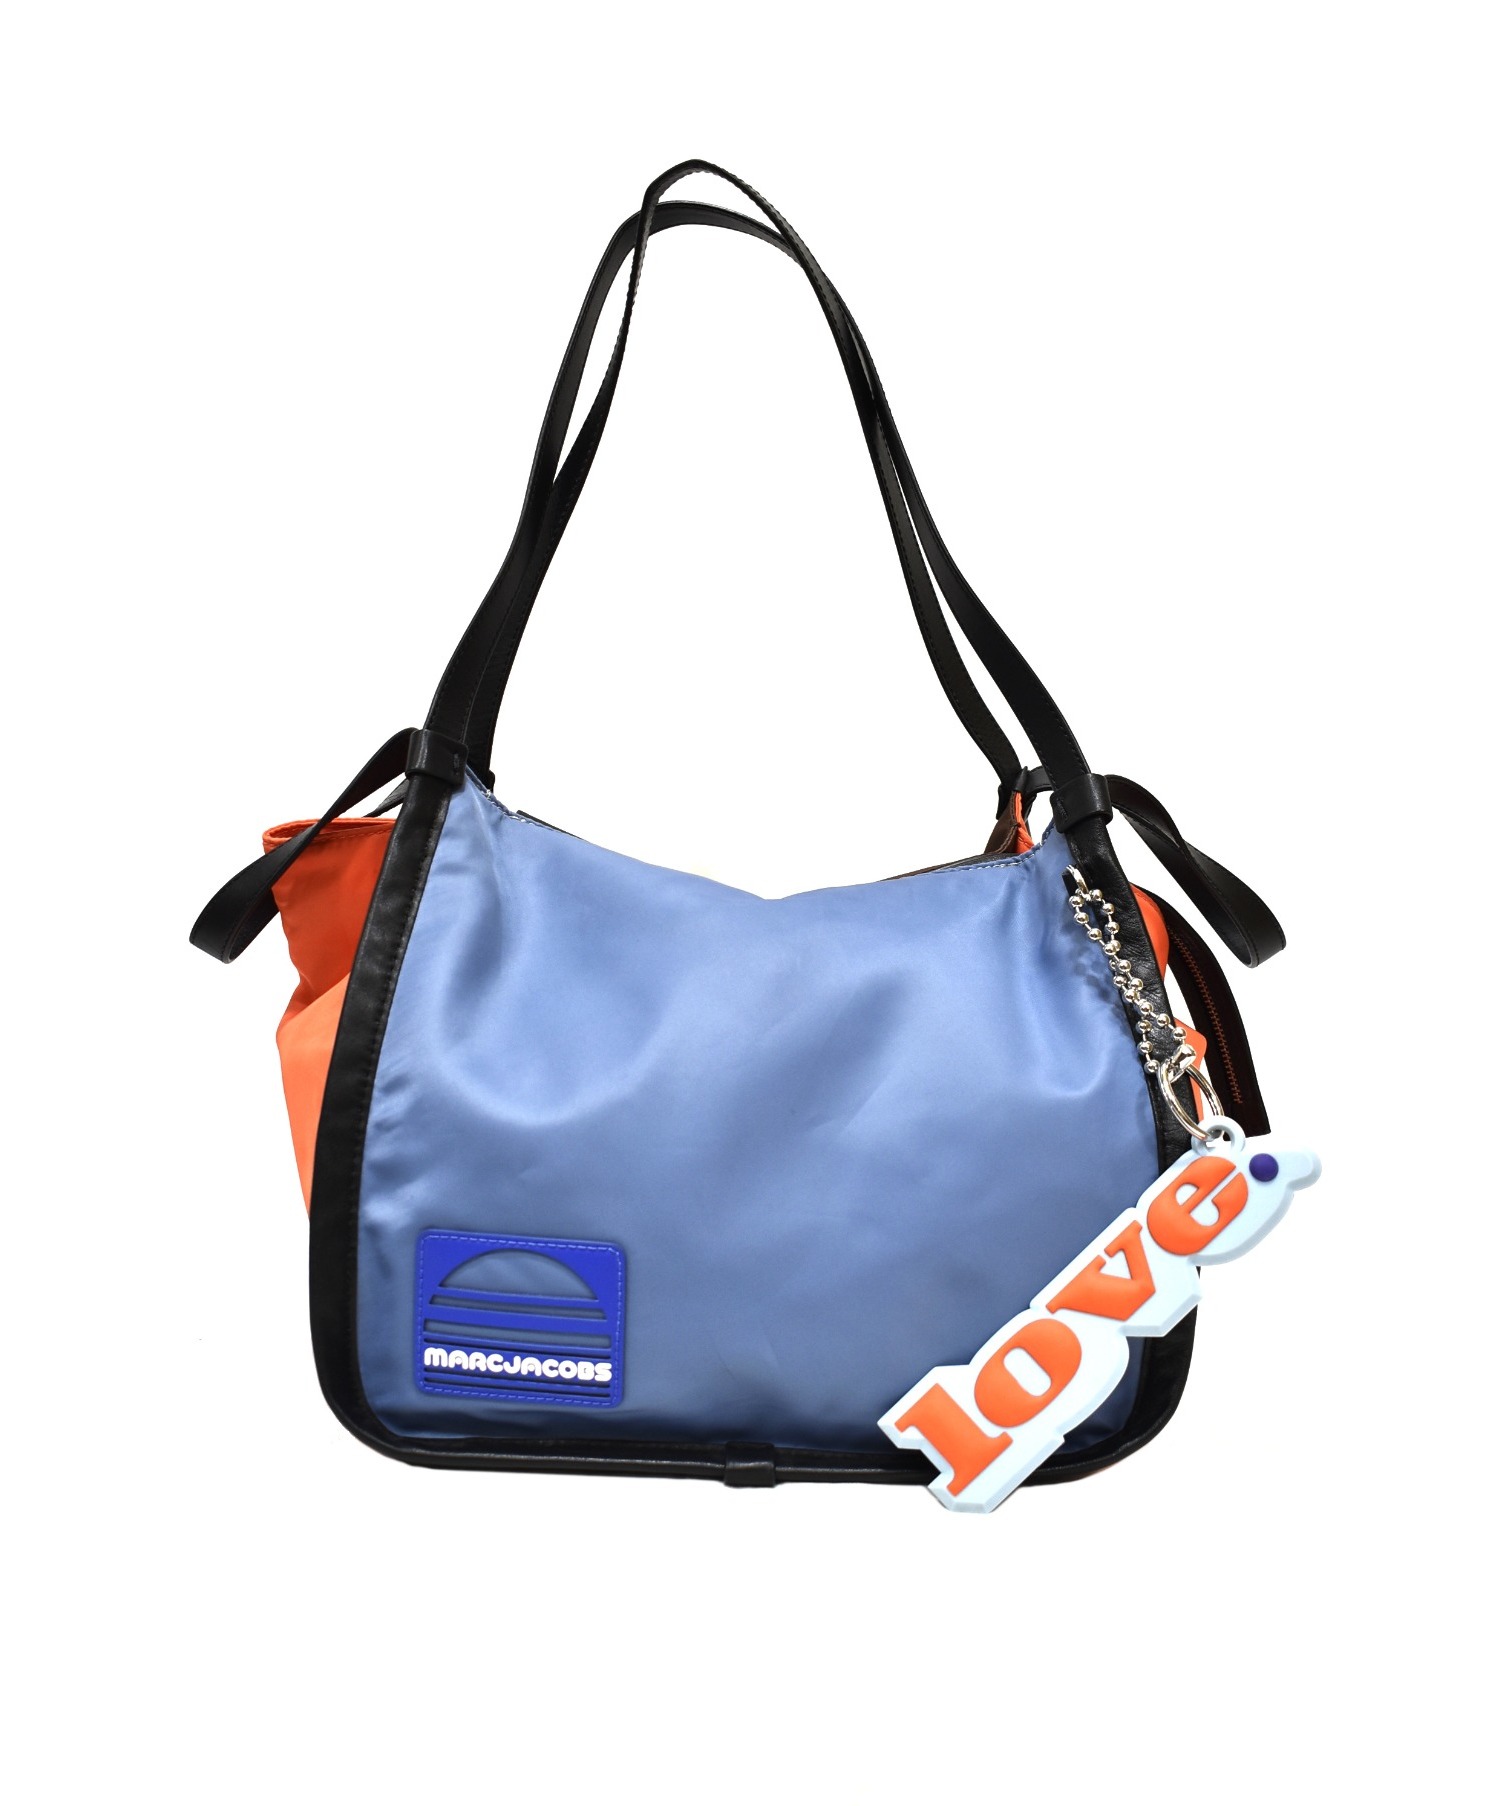 MARC JACOBS (マークジェイコブス) カラーブロックスポーツトートバッグ オレンジ×ブルー サイズ:下記参照 M0013934-886  Colour-block Sport Tote Bag